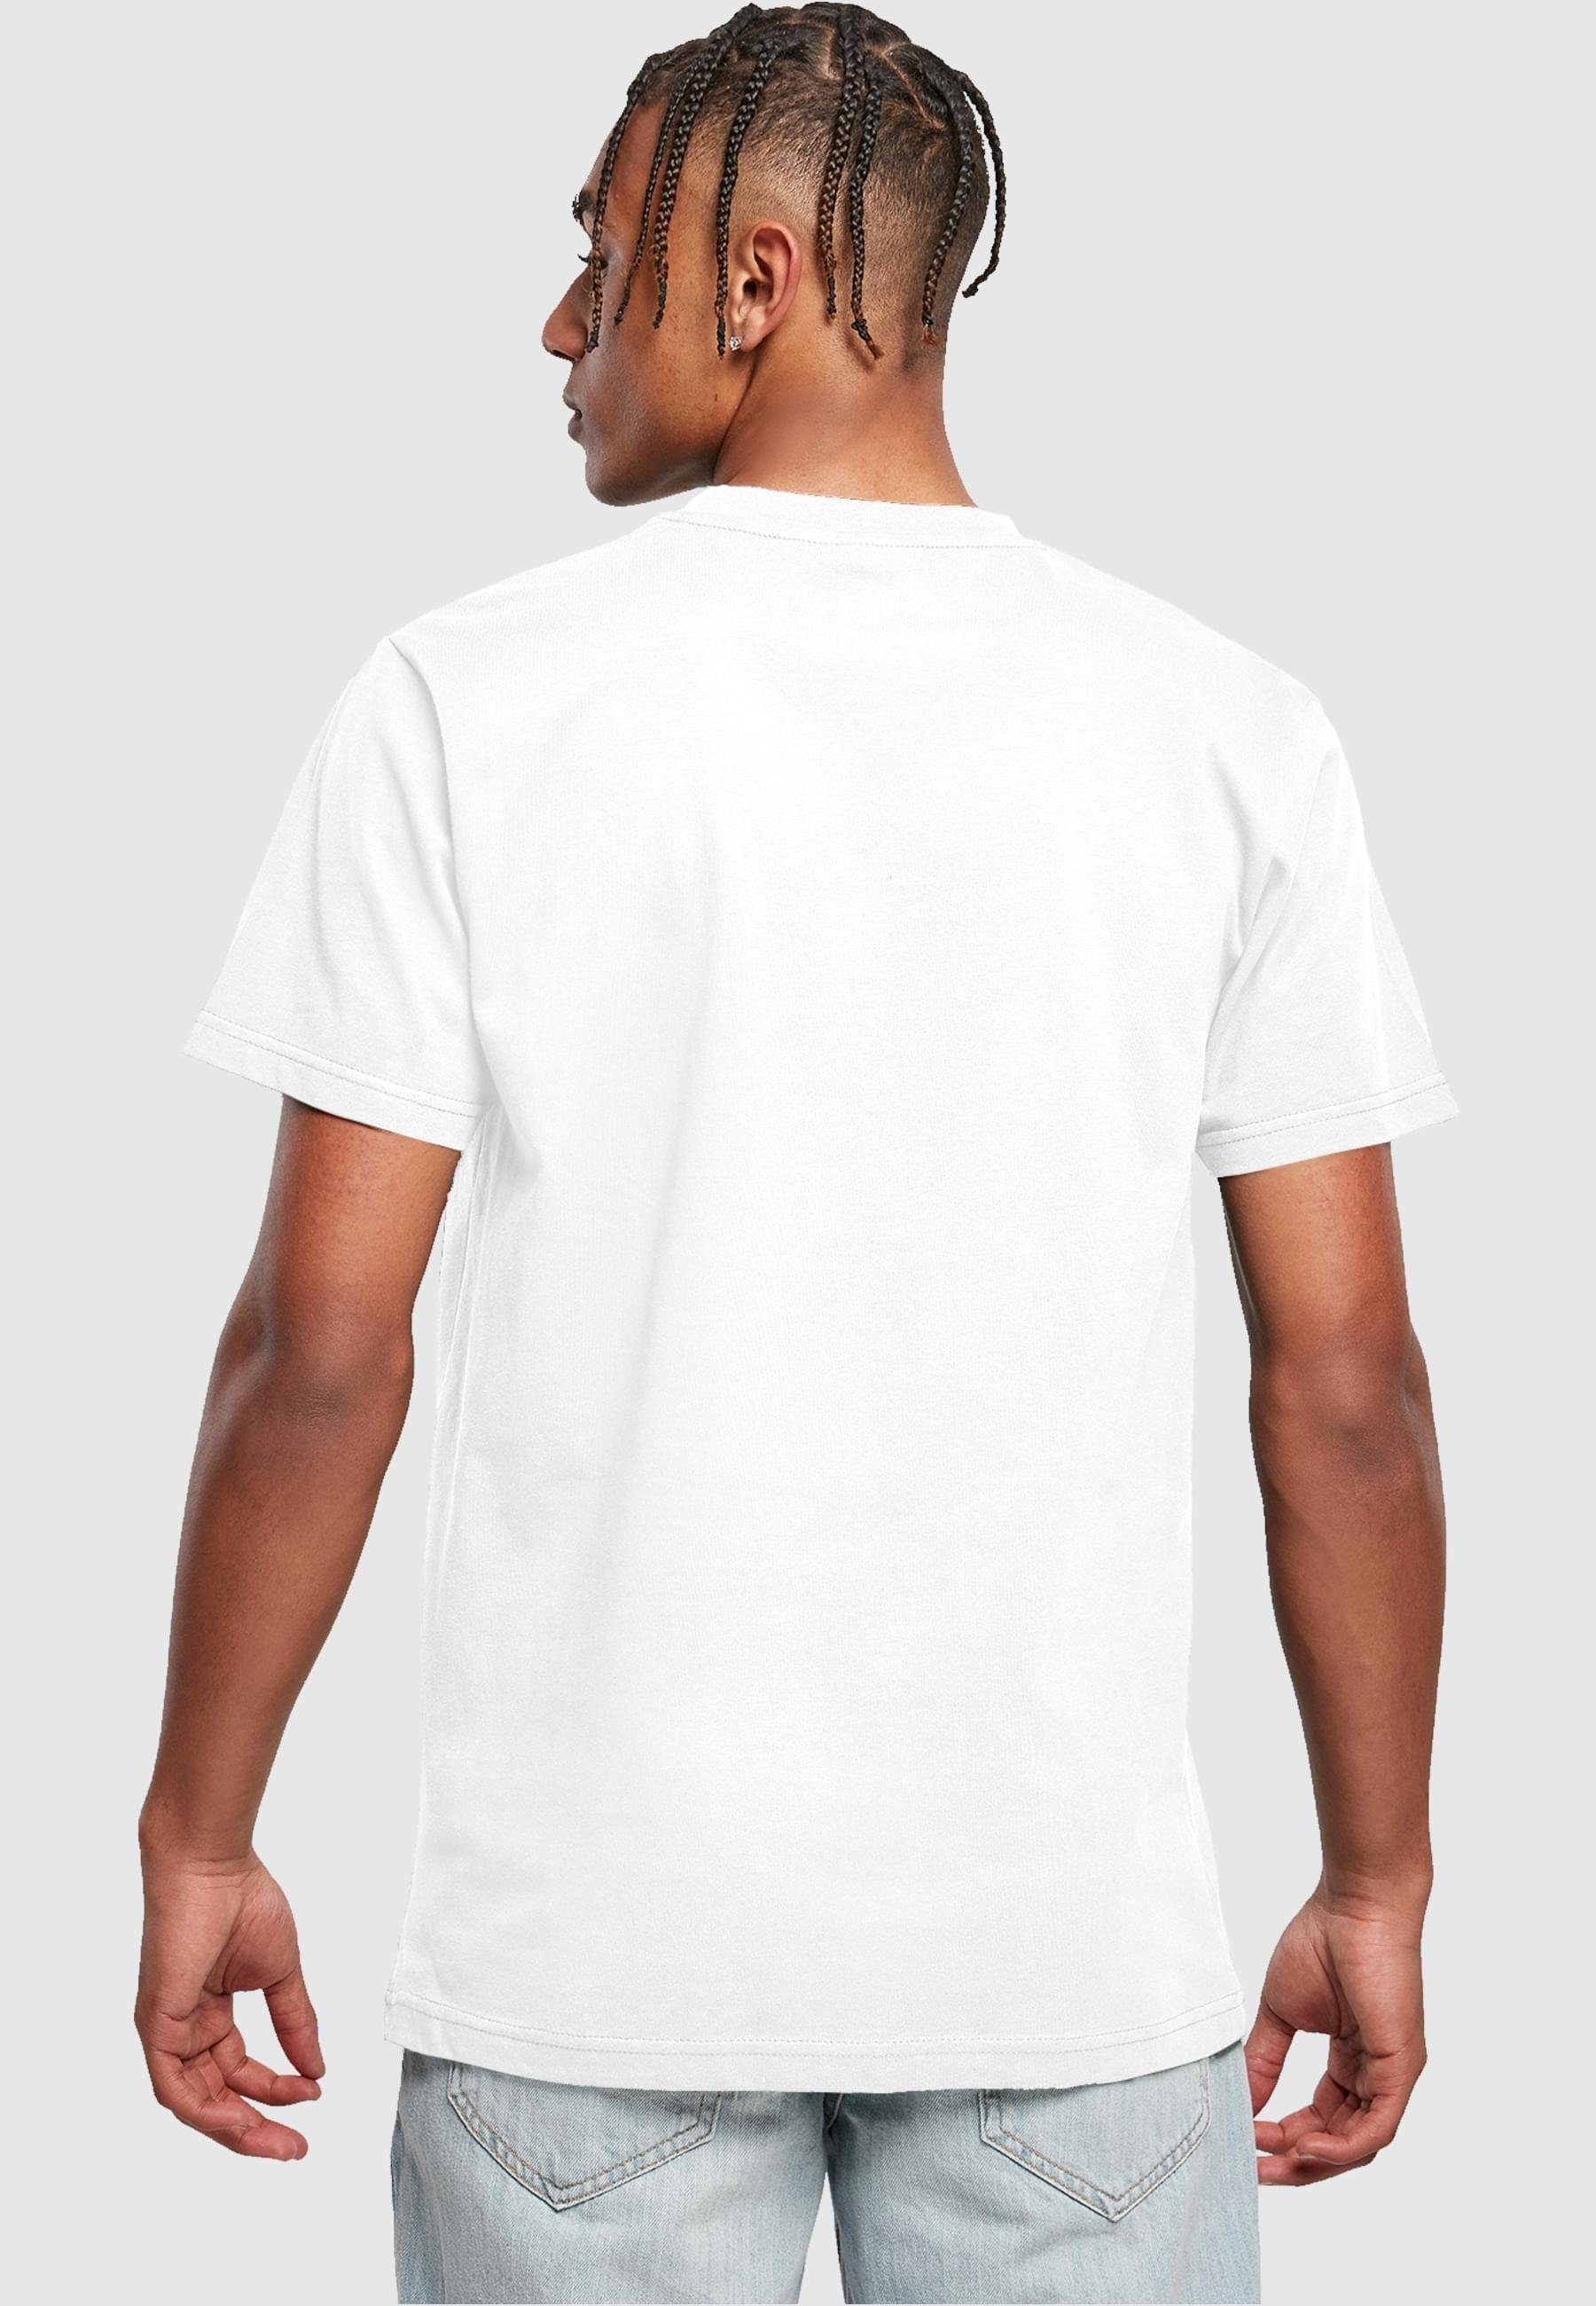 Herren T-Shirt T-Shirt LA Merchcode (1-tlg) white LA LAYLA